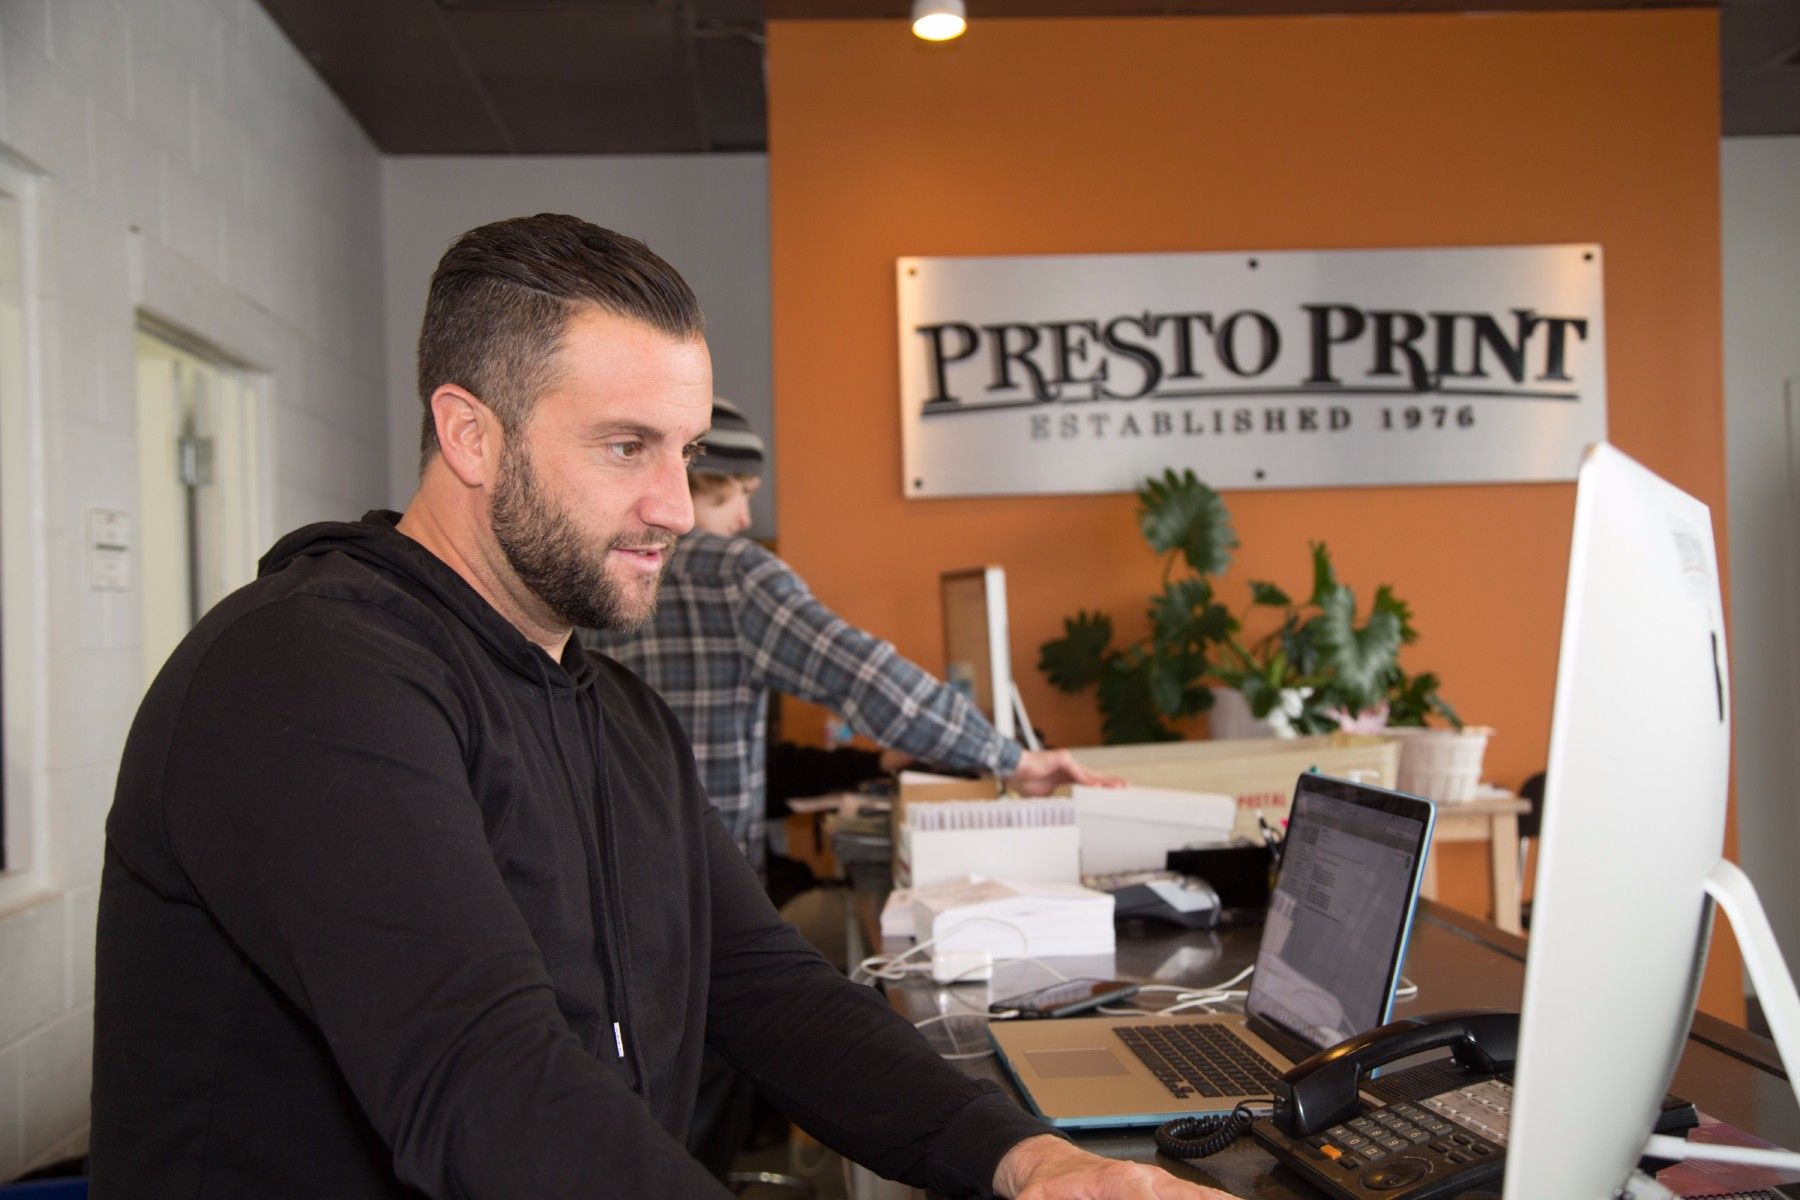 Presto Print employee offering printing services